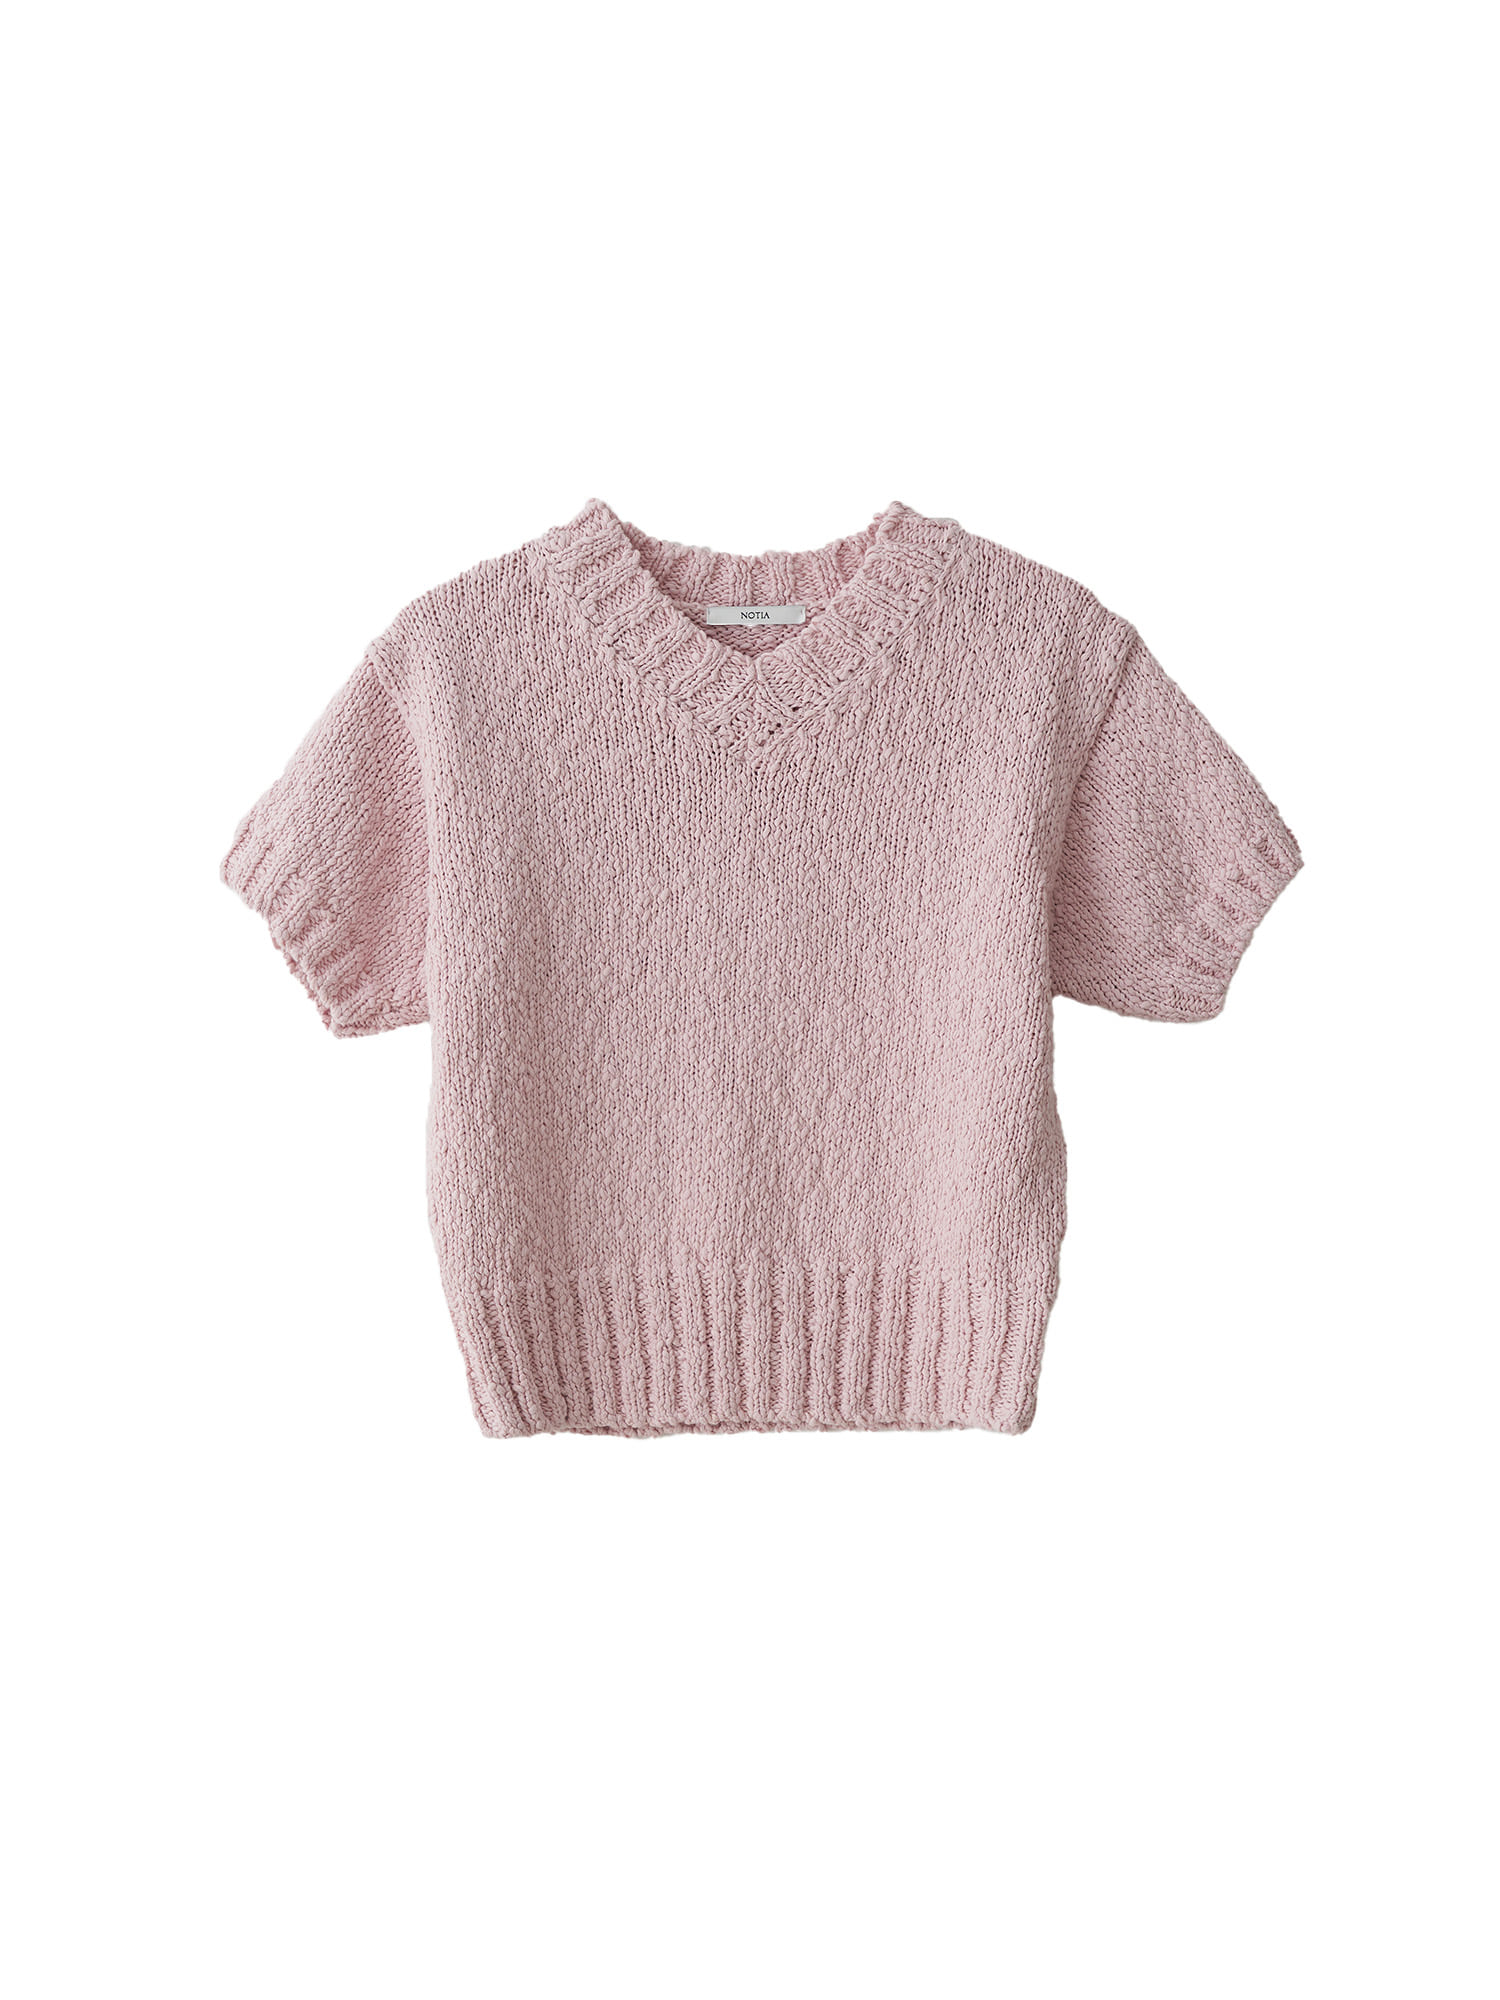 Organic Cotton V Neck Knit Top - Light Pink